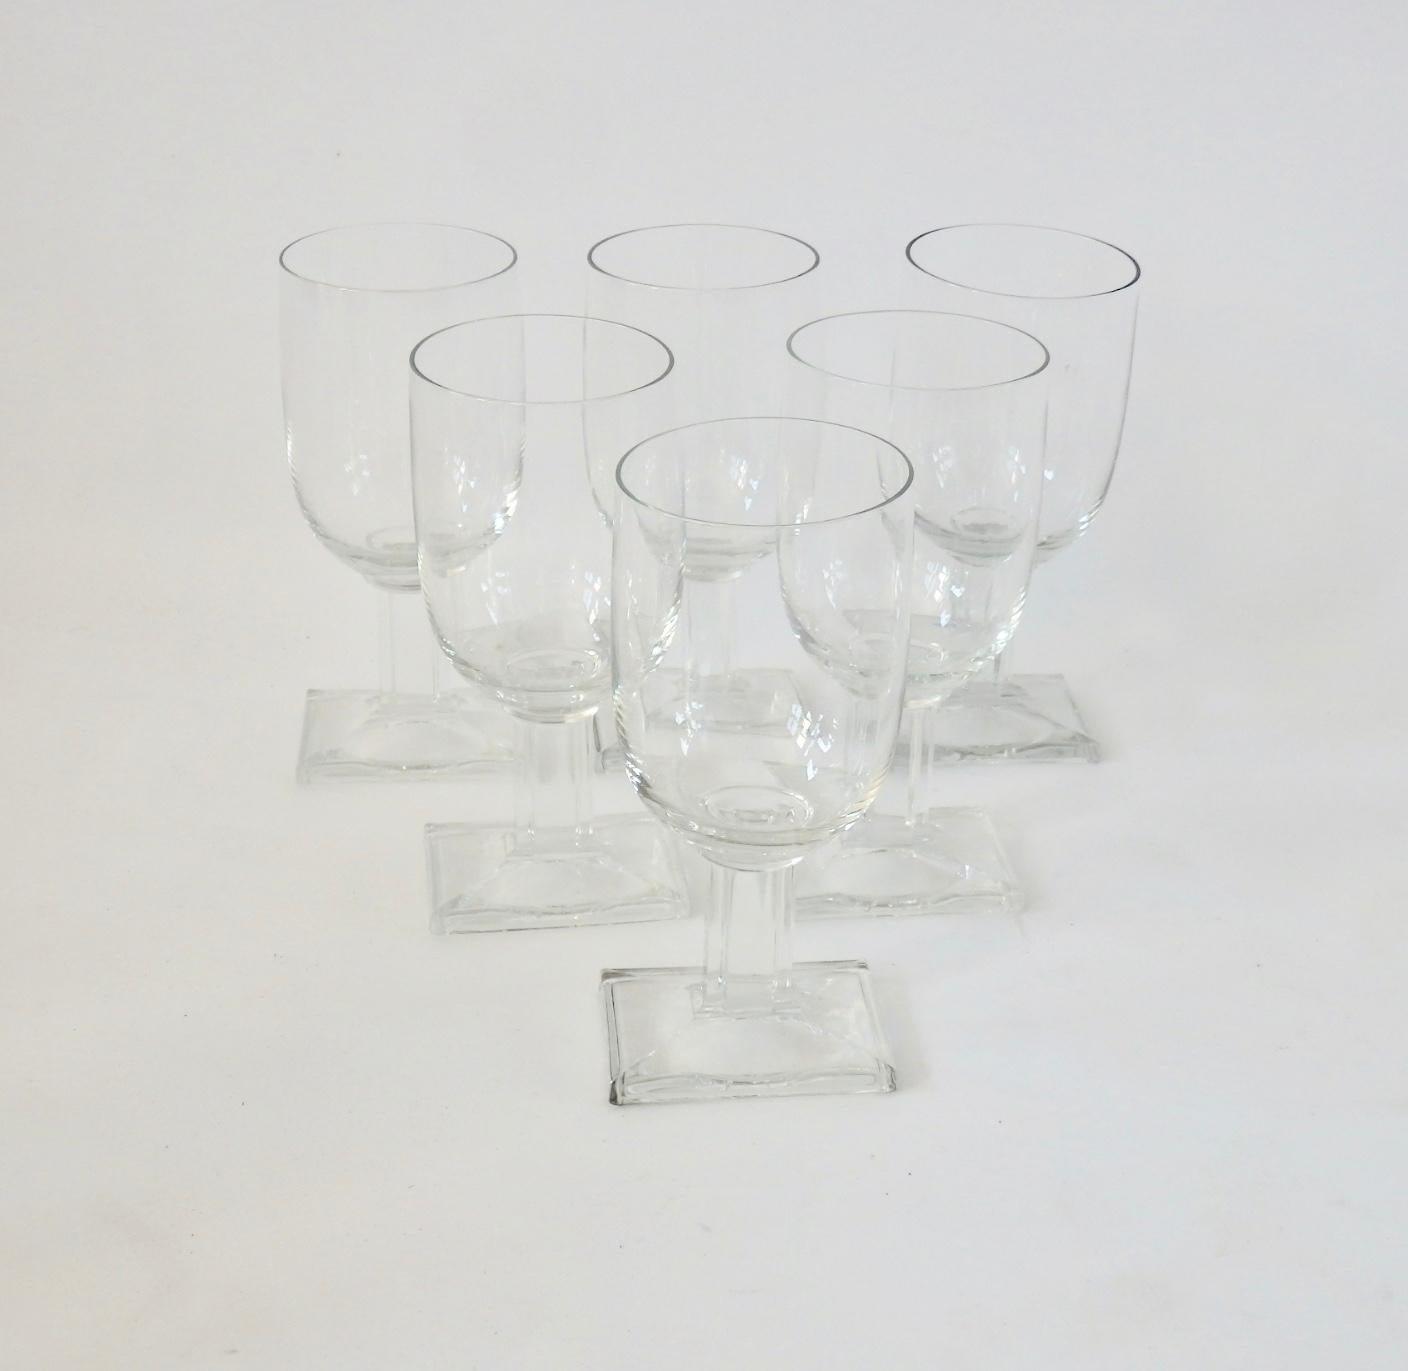 Six Art Deco wine glasses. Rectangular base supports round glass on fluted shaft. Base measures 2 7/8